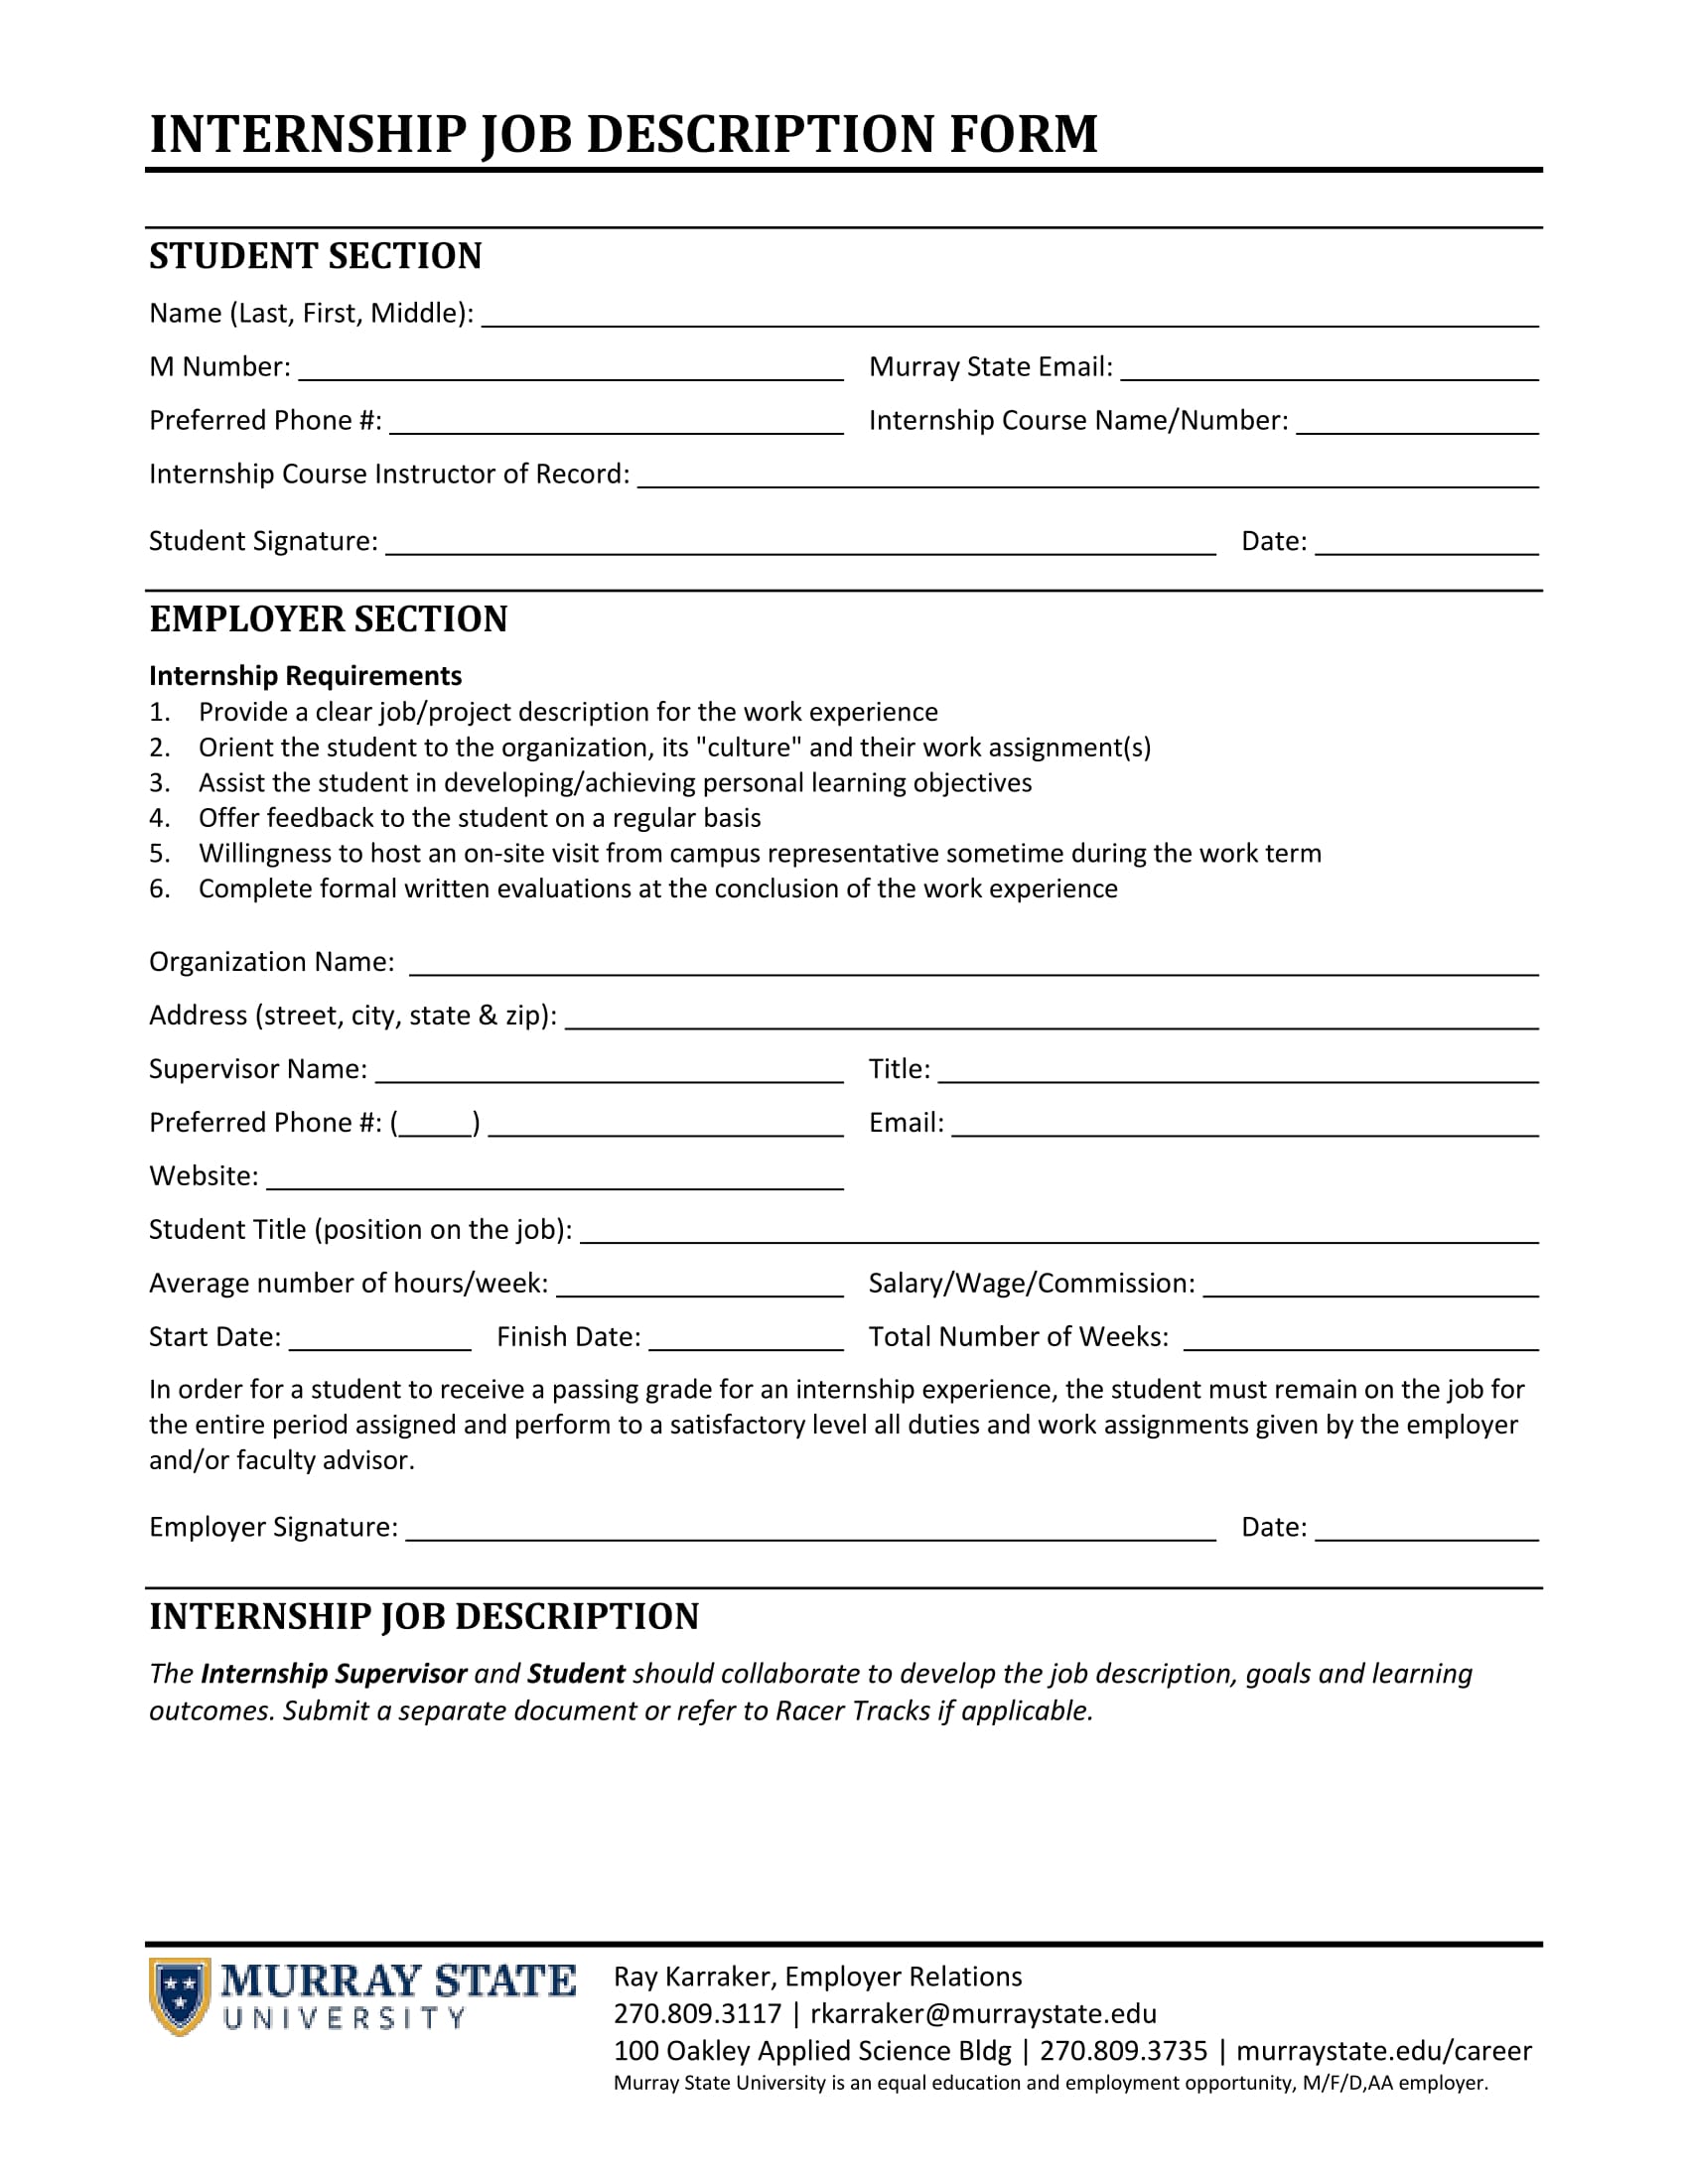 internship job description form 1